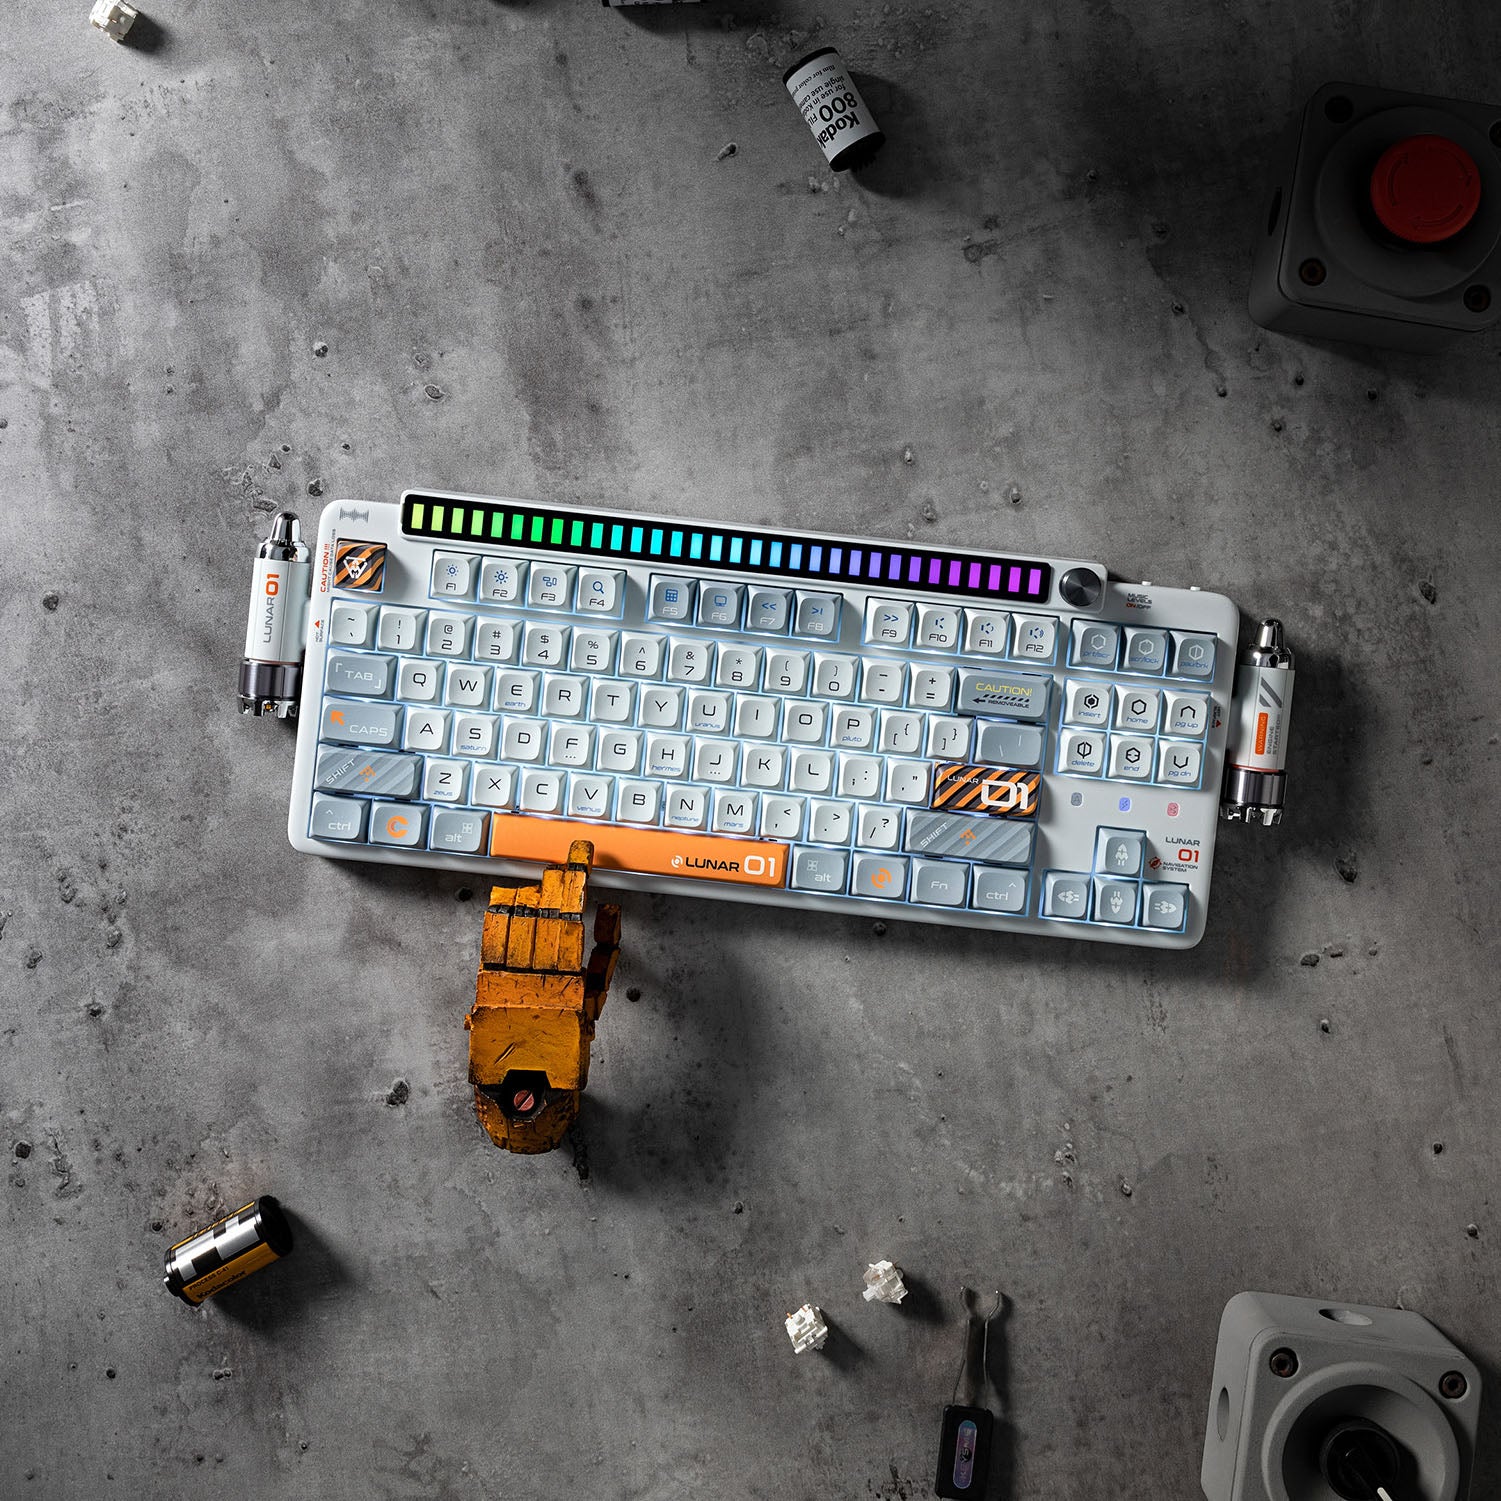 Fully Customizable Mechanical Keyboard Lunar 01